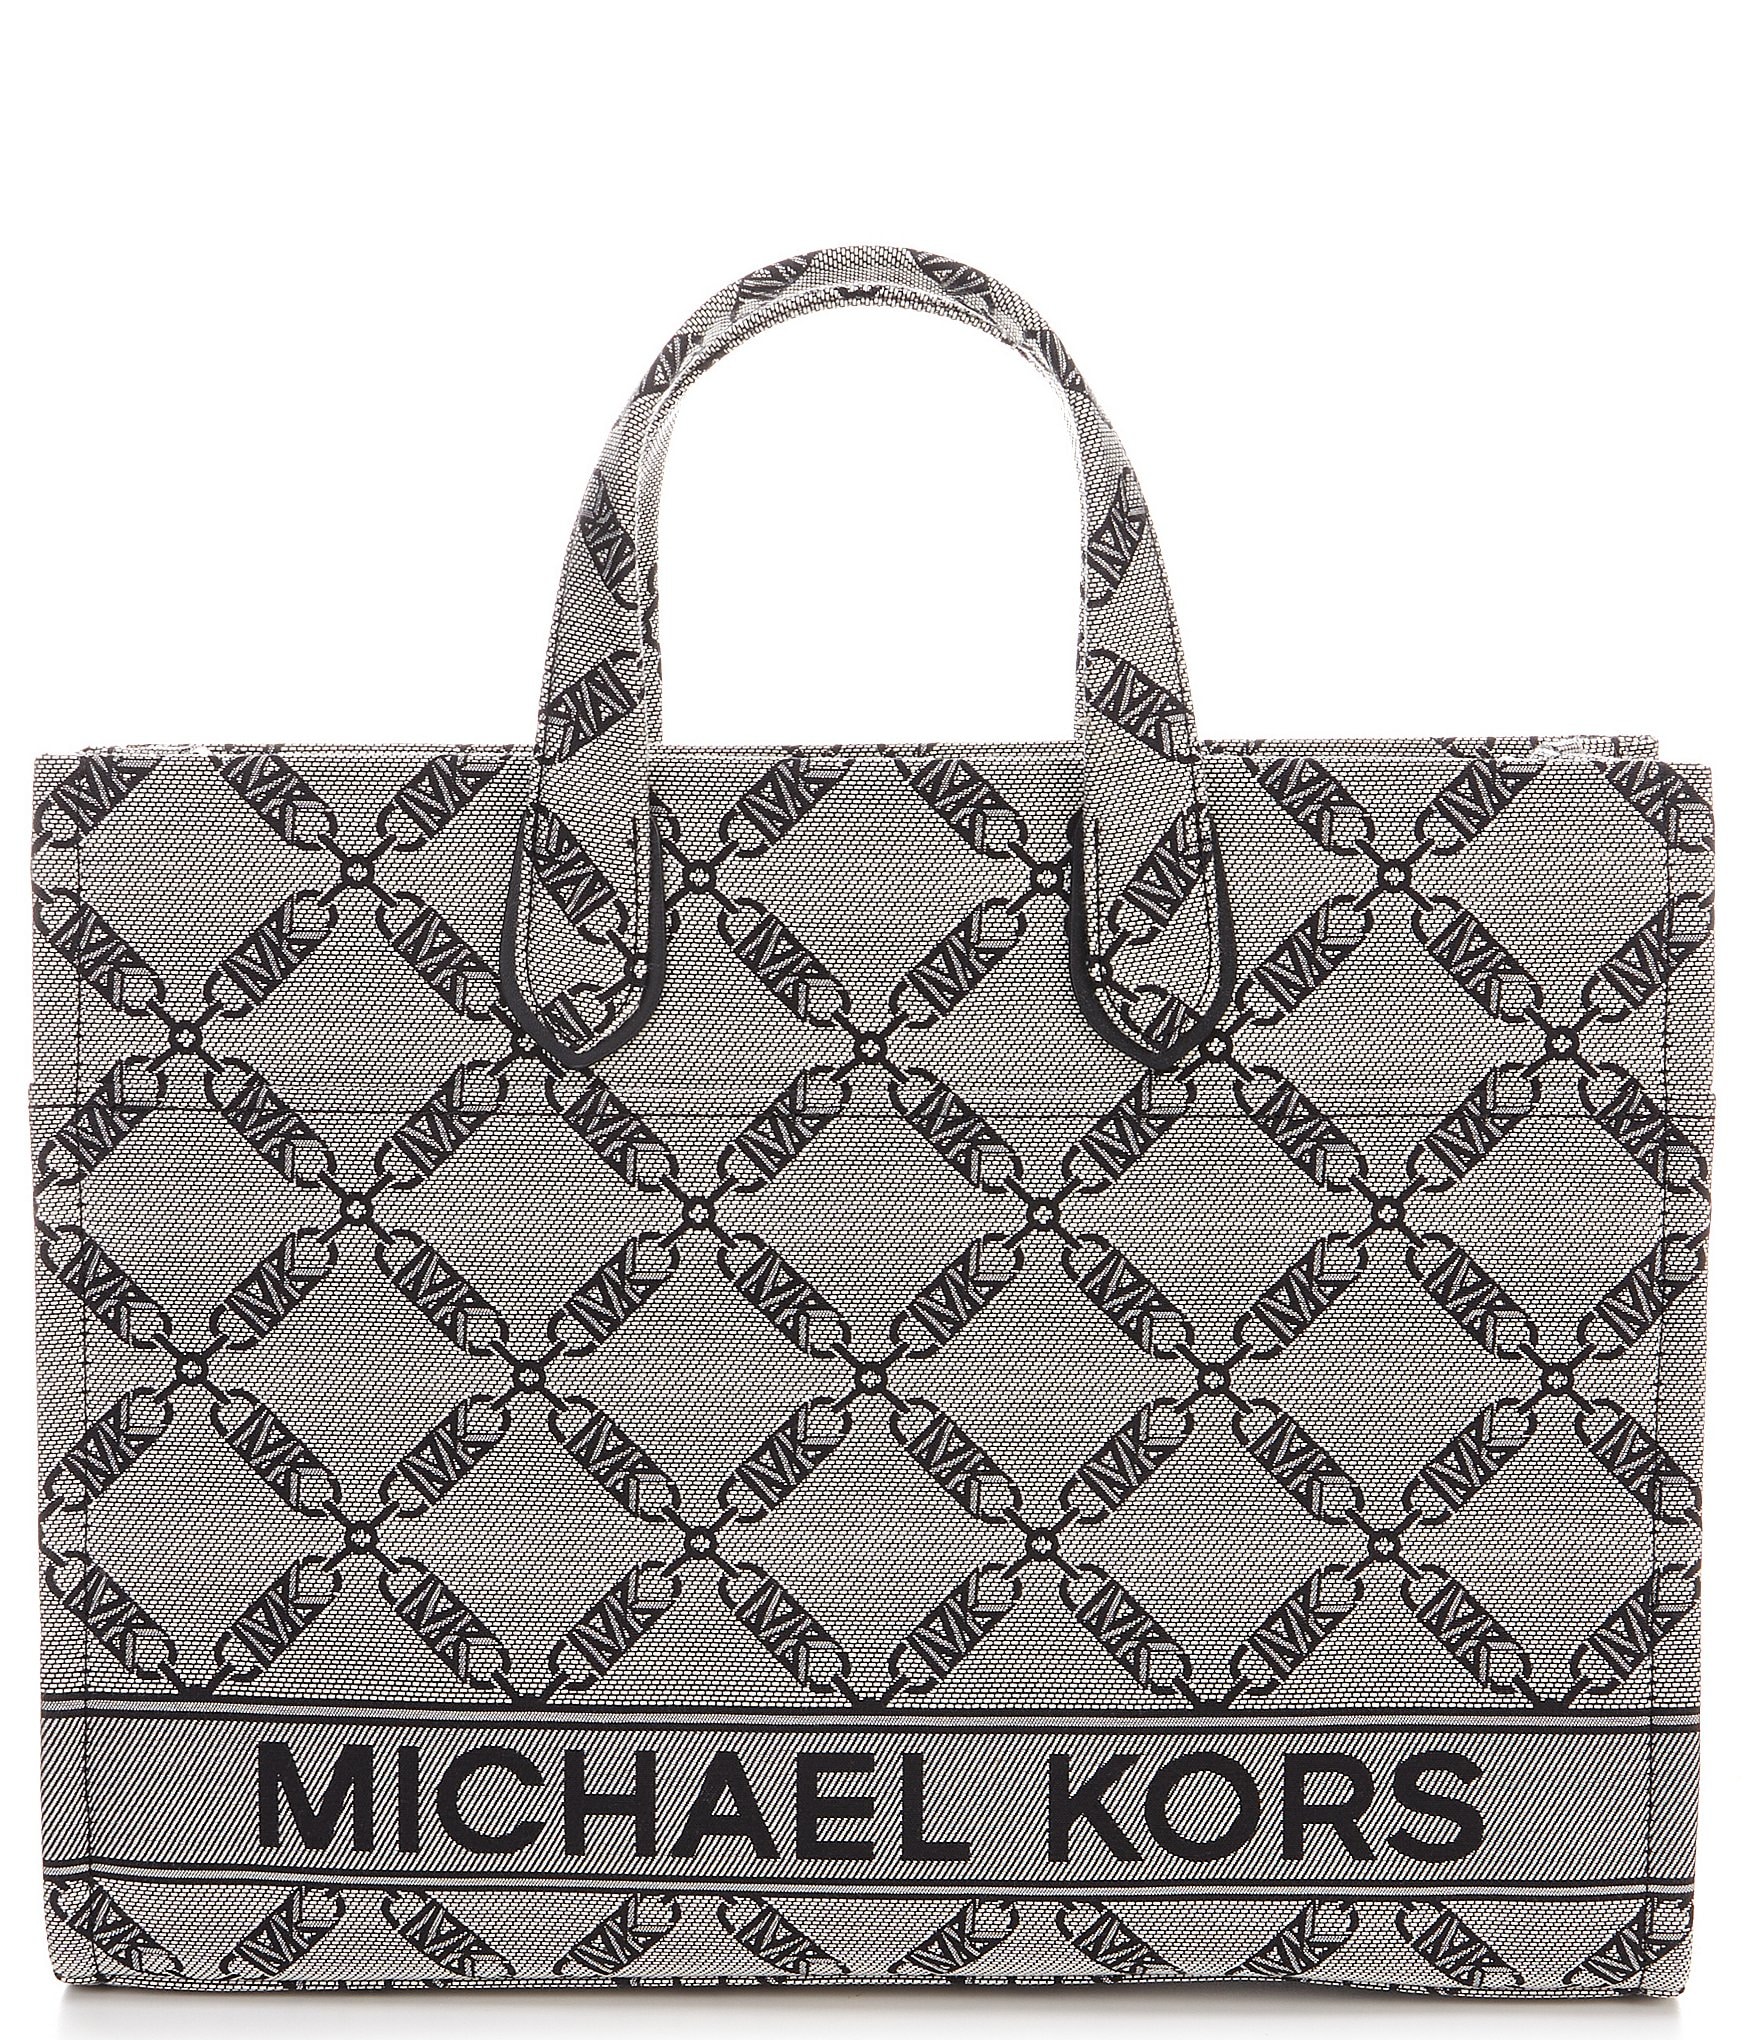 MICHAEL Michael Kors Handbags, Dillards.com